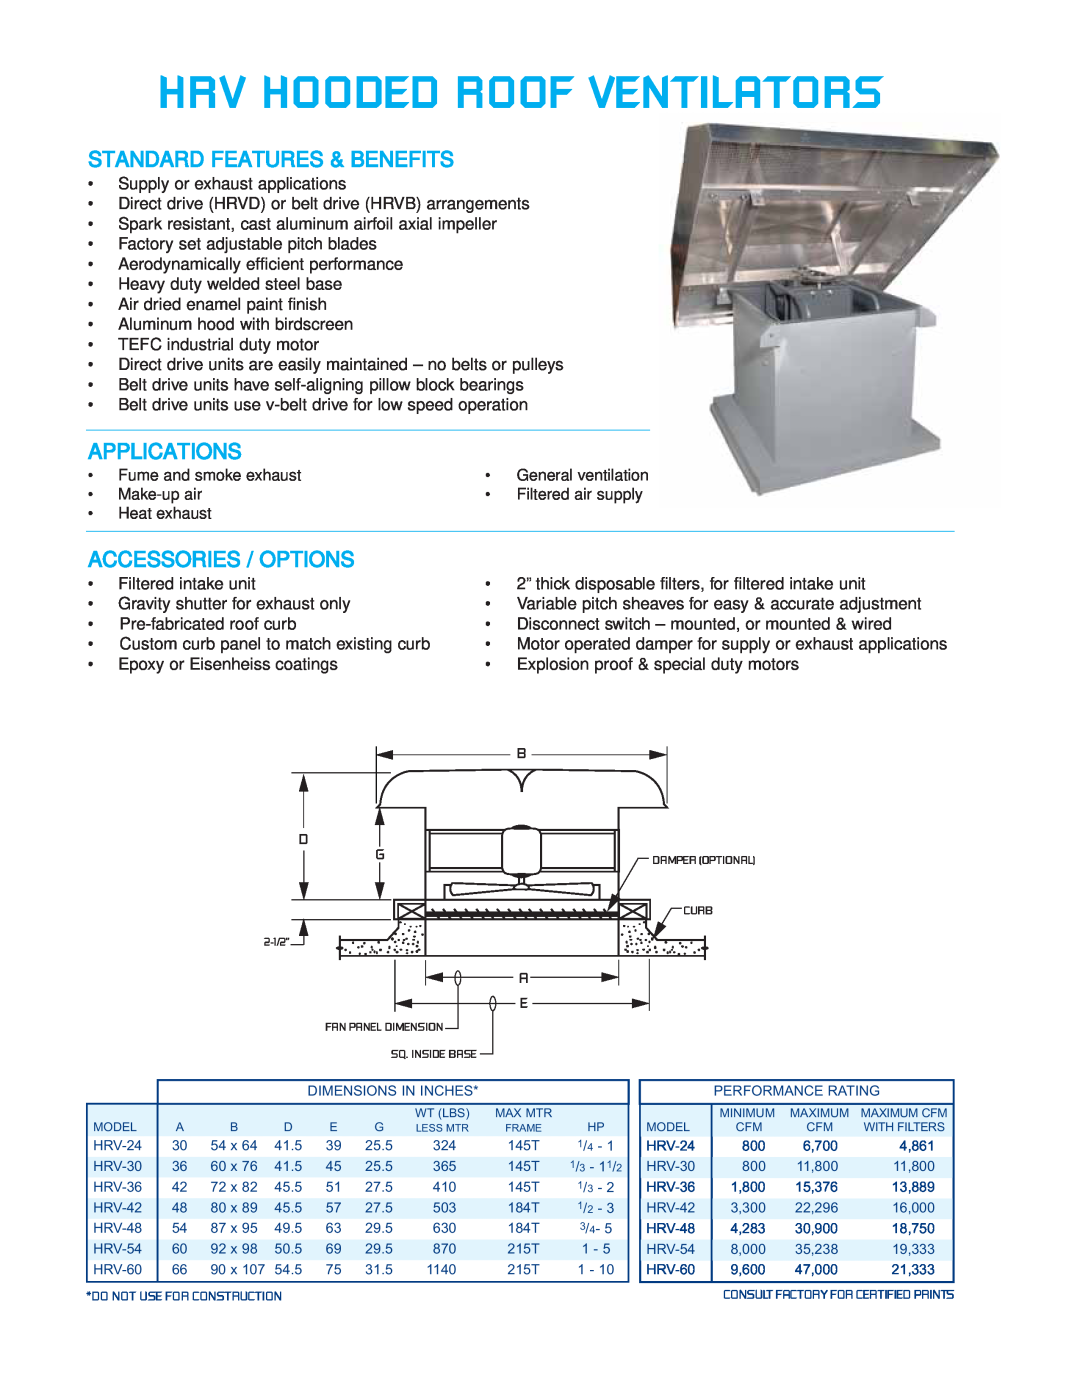 CFM HRV-0904, HRV-48, HRV-60 Standard Features & Benefits, Applications, Accessories / Options, Hrv Hooded Roof Ventilators 